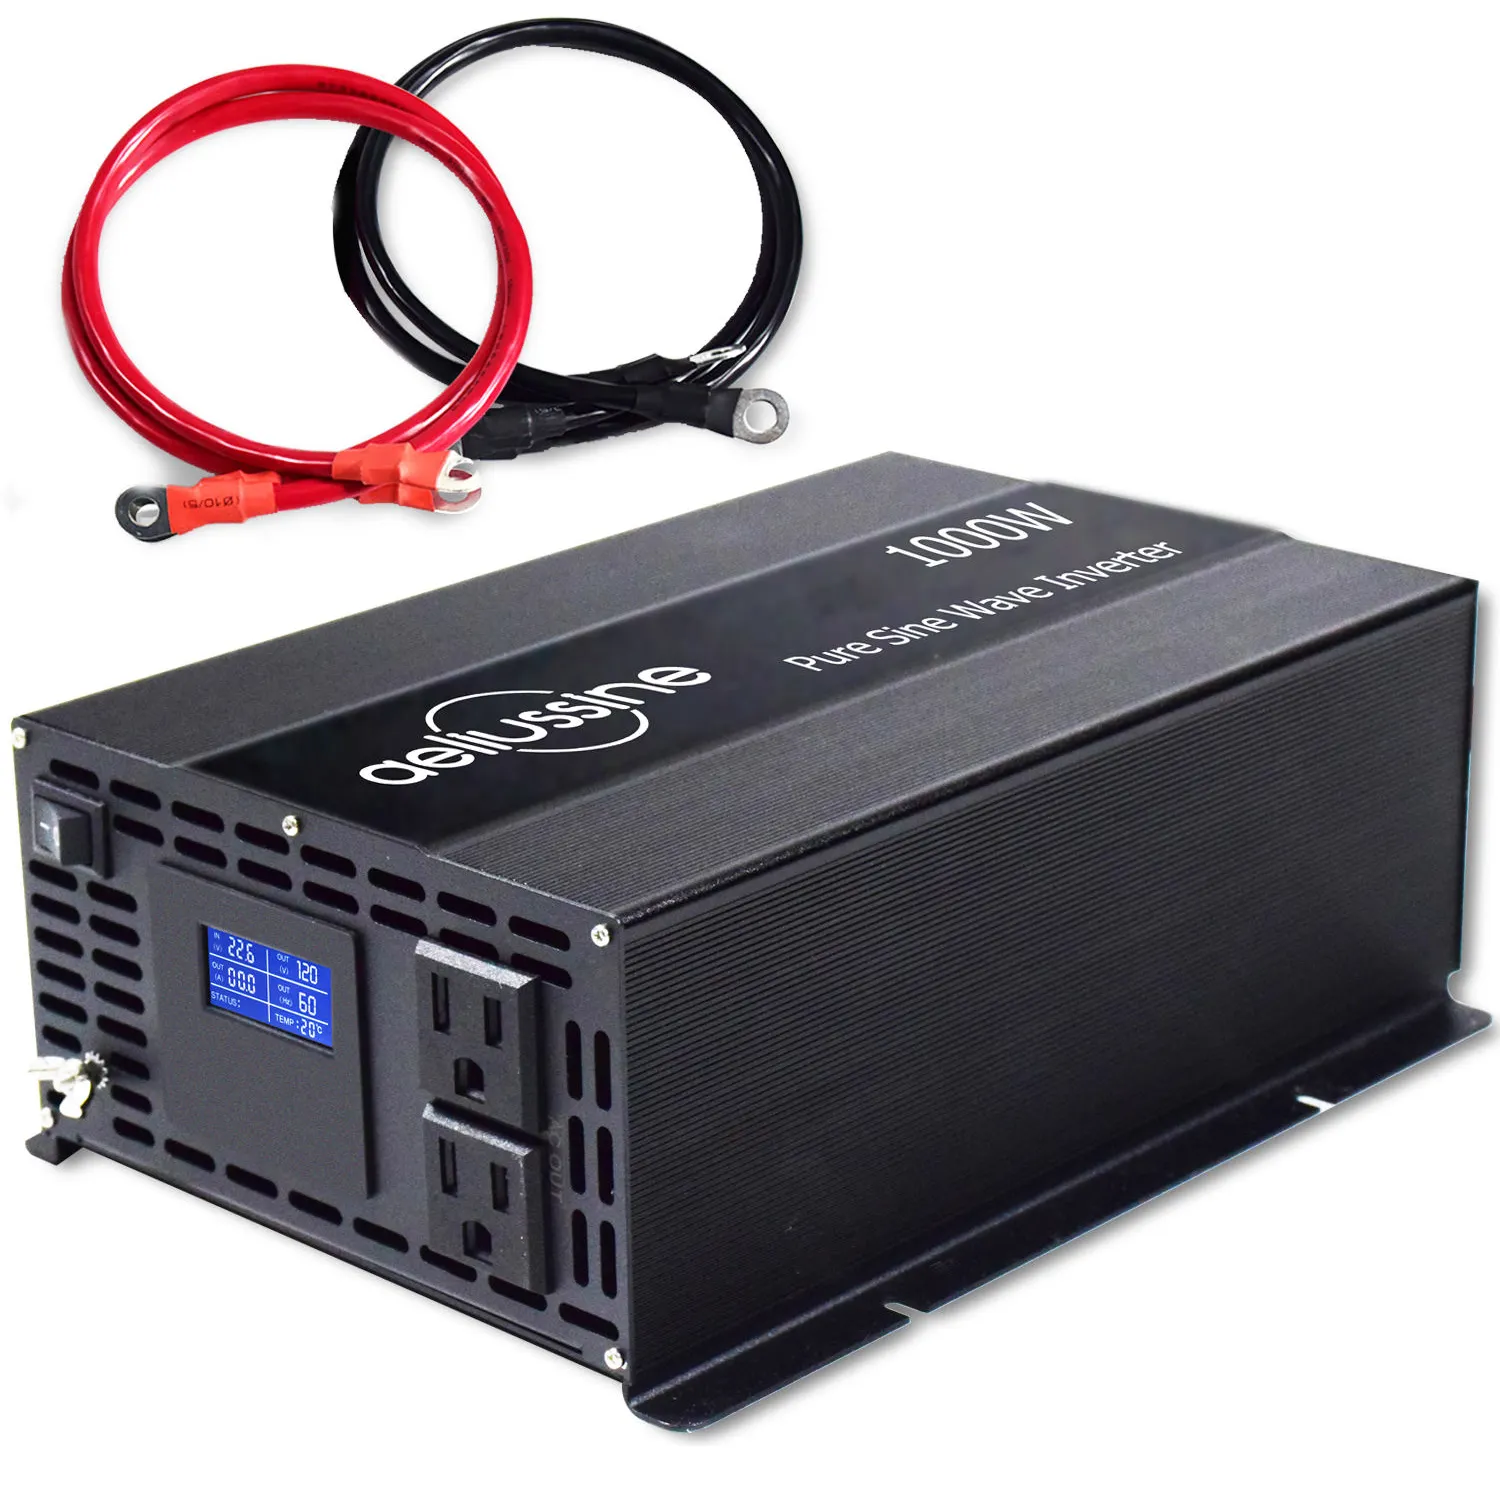 Aeliussine 1000W 24 Volt Pure Sine Wave Power Inverter 1000 Watt 24V DC to AC 110V 120V With 2 US Socket, LCD Display For Car